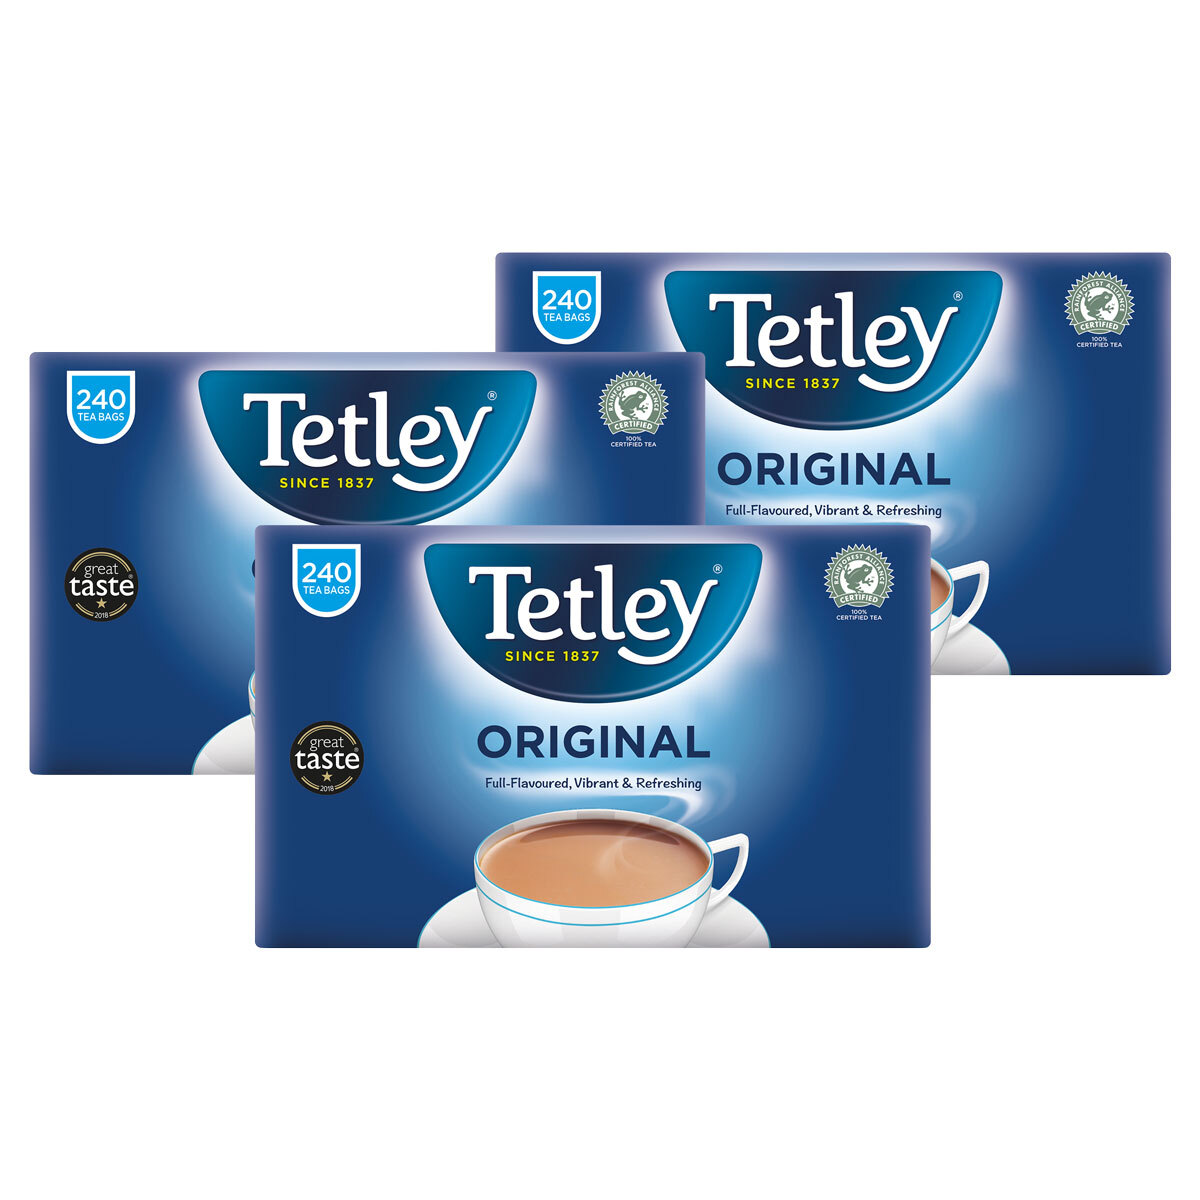 Tetley tea bags